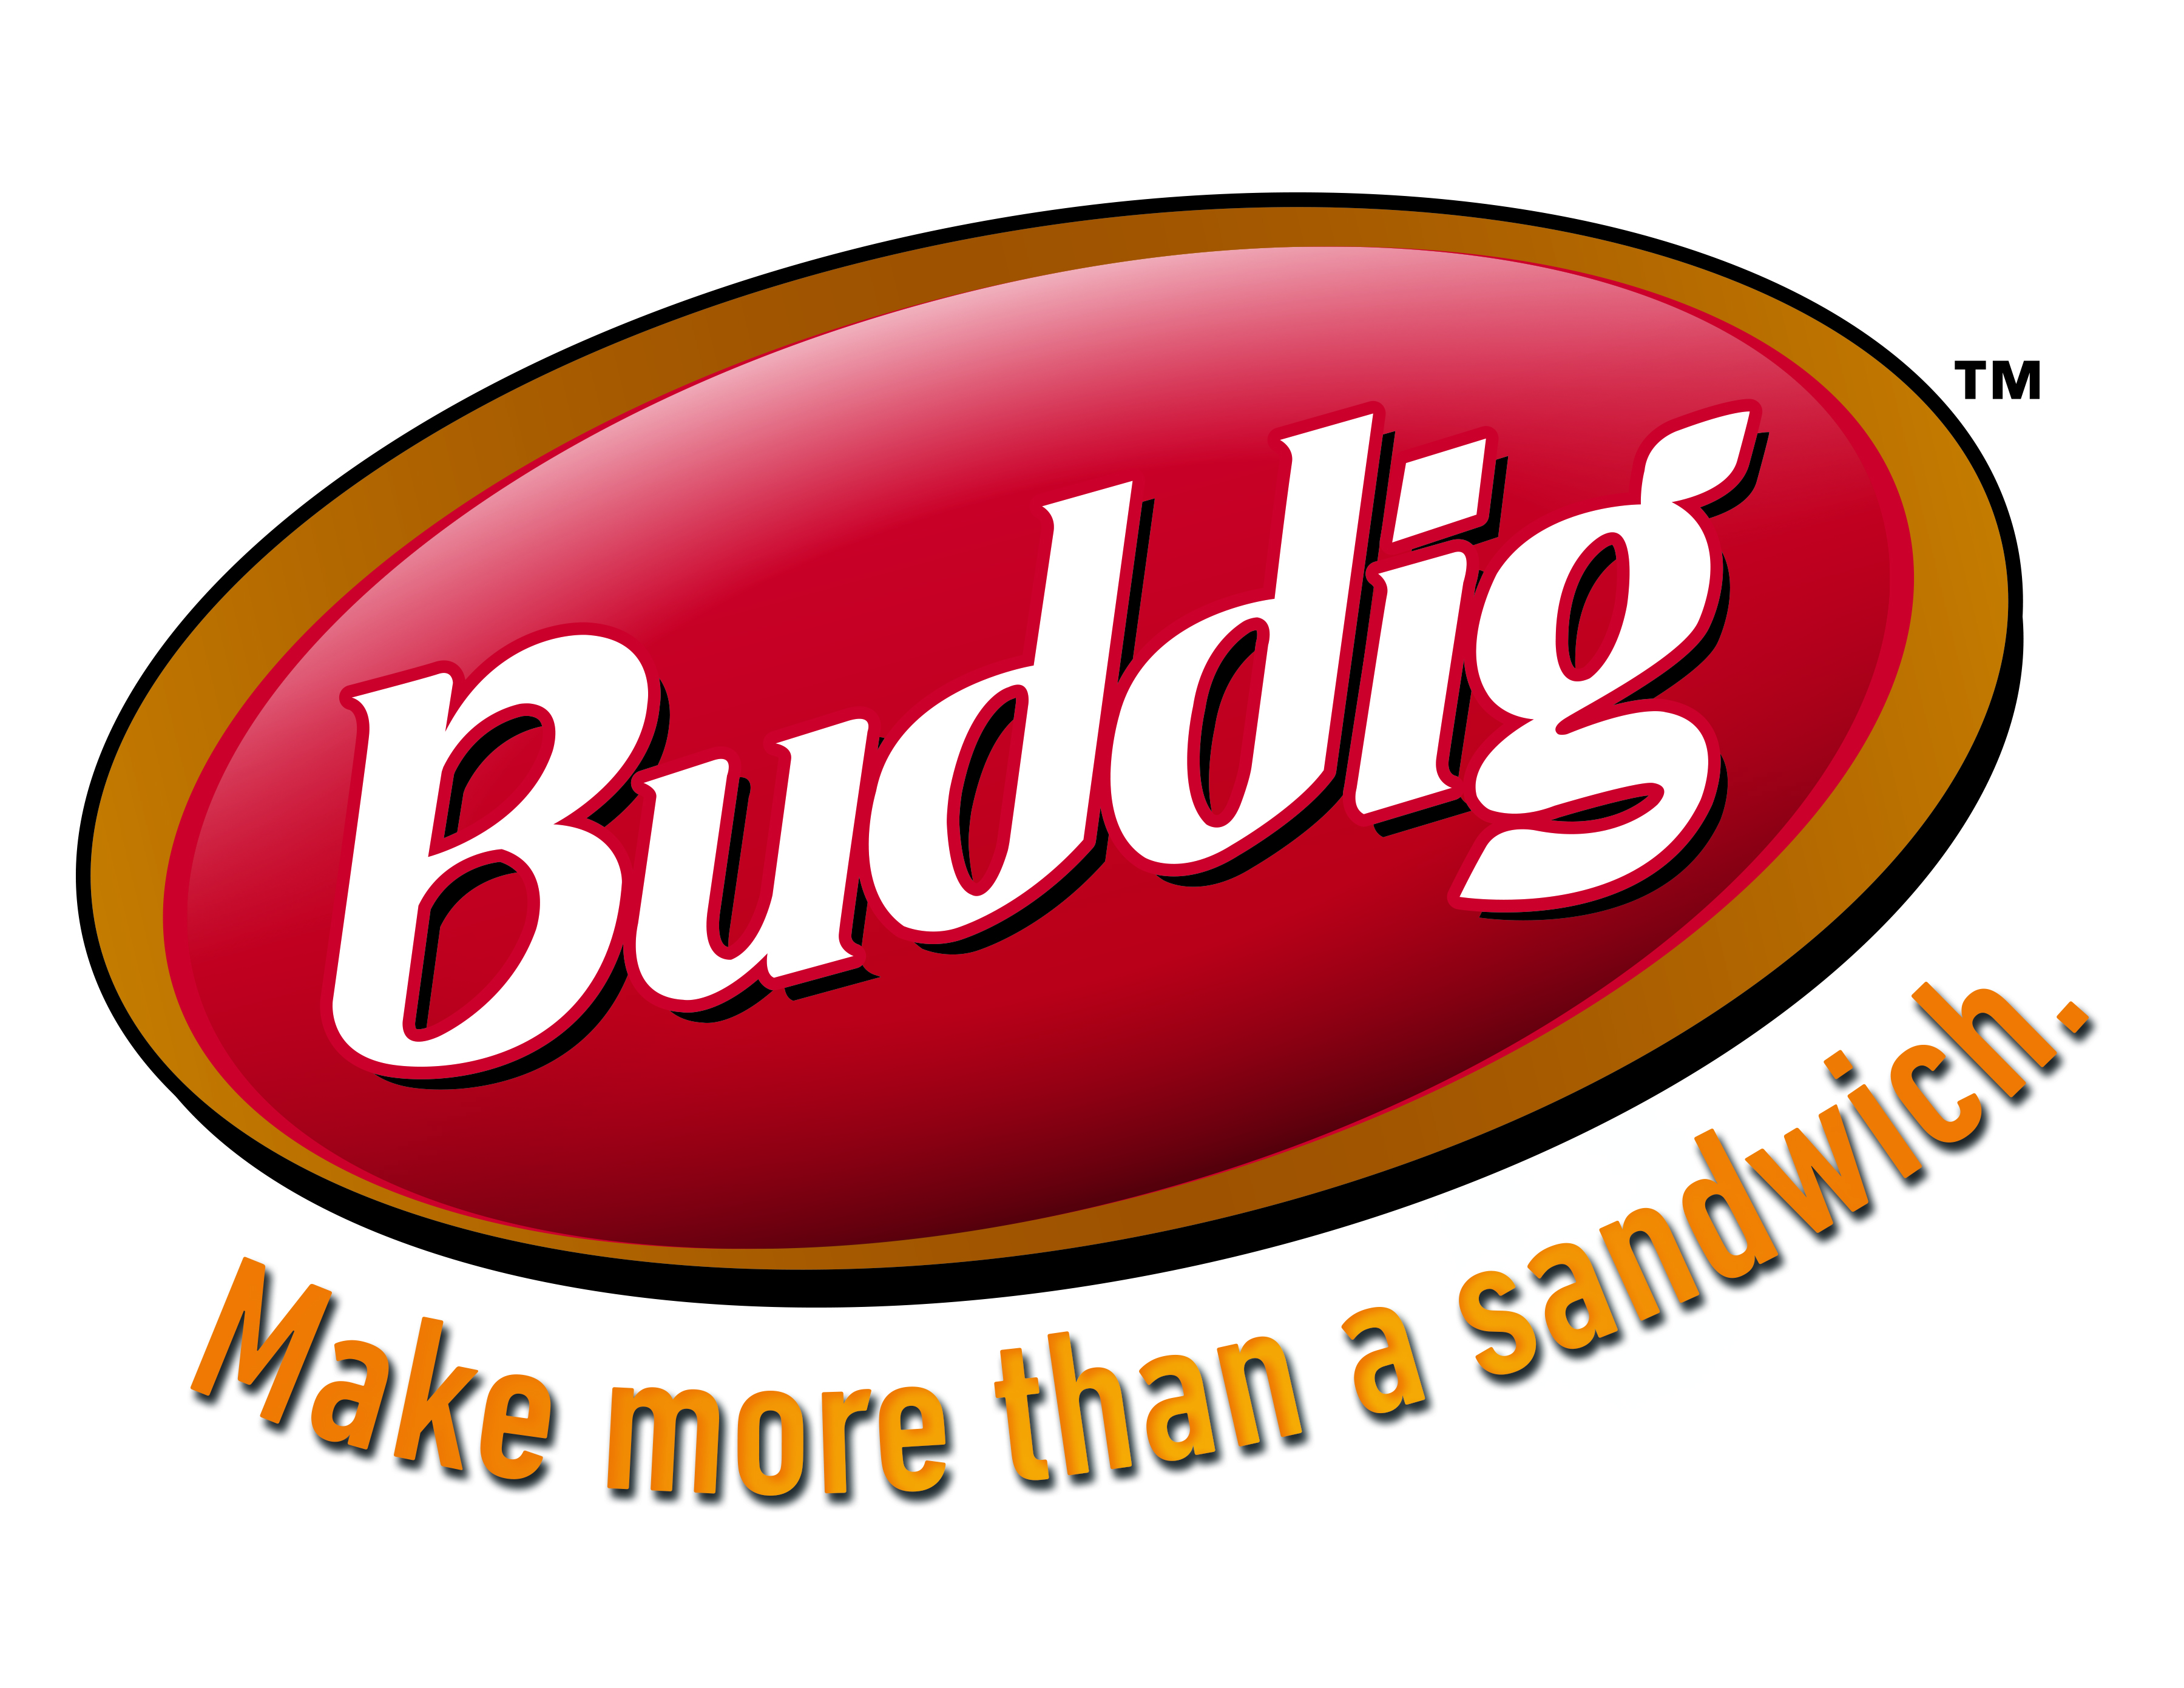 Buddig_Logo_Tagline